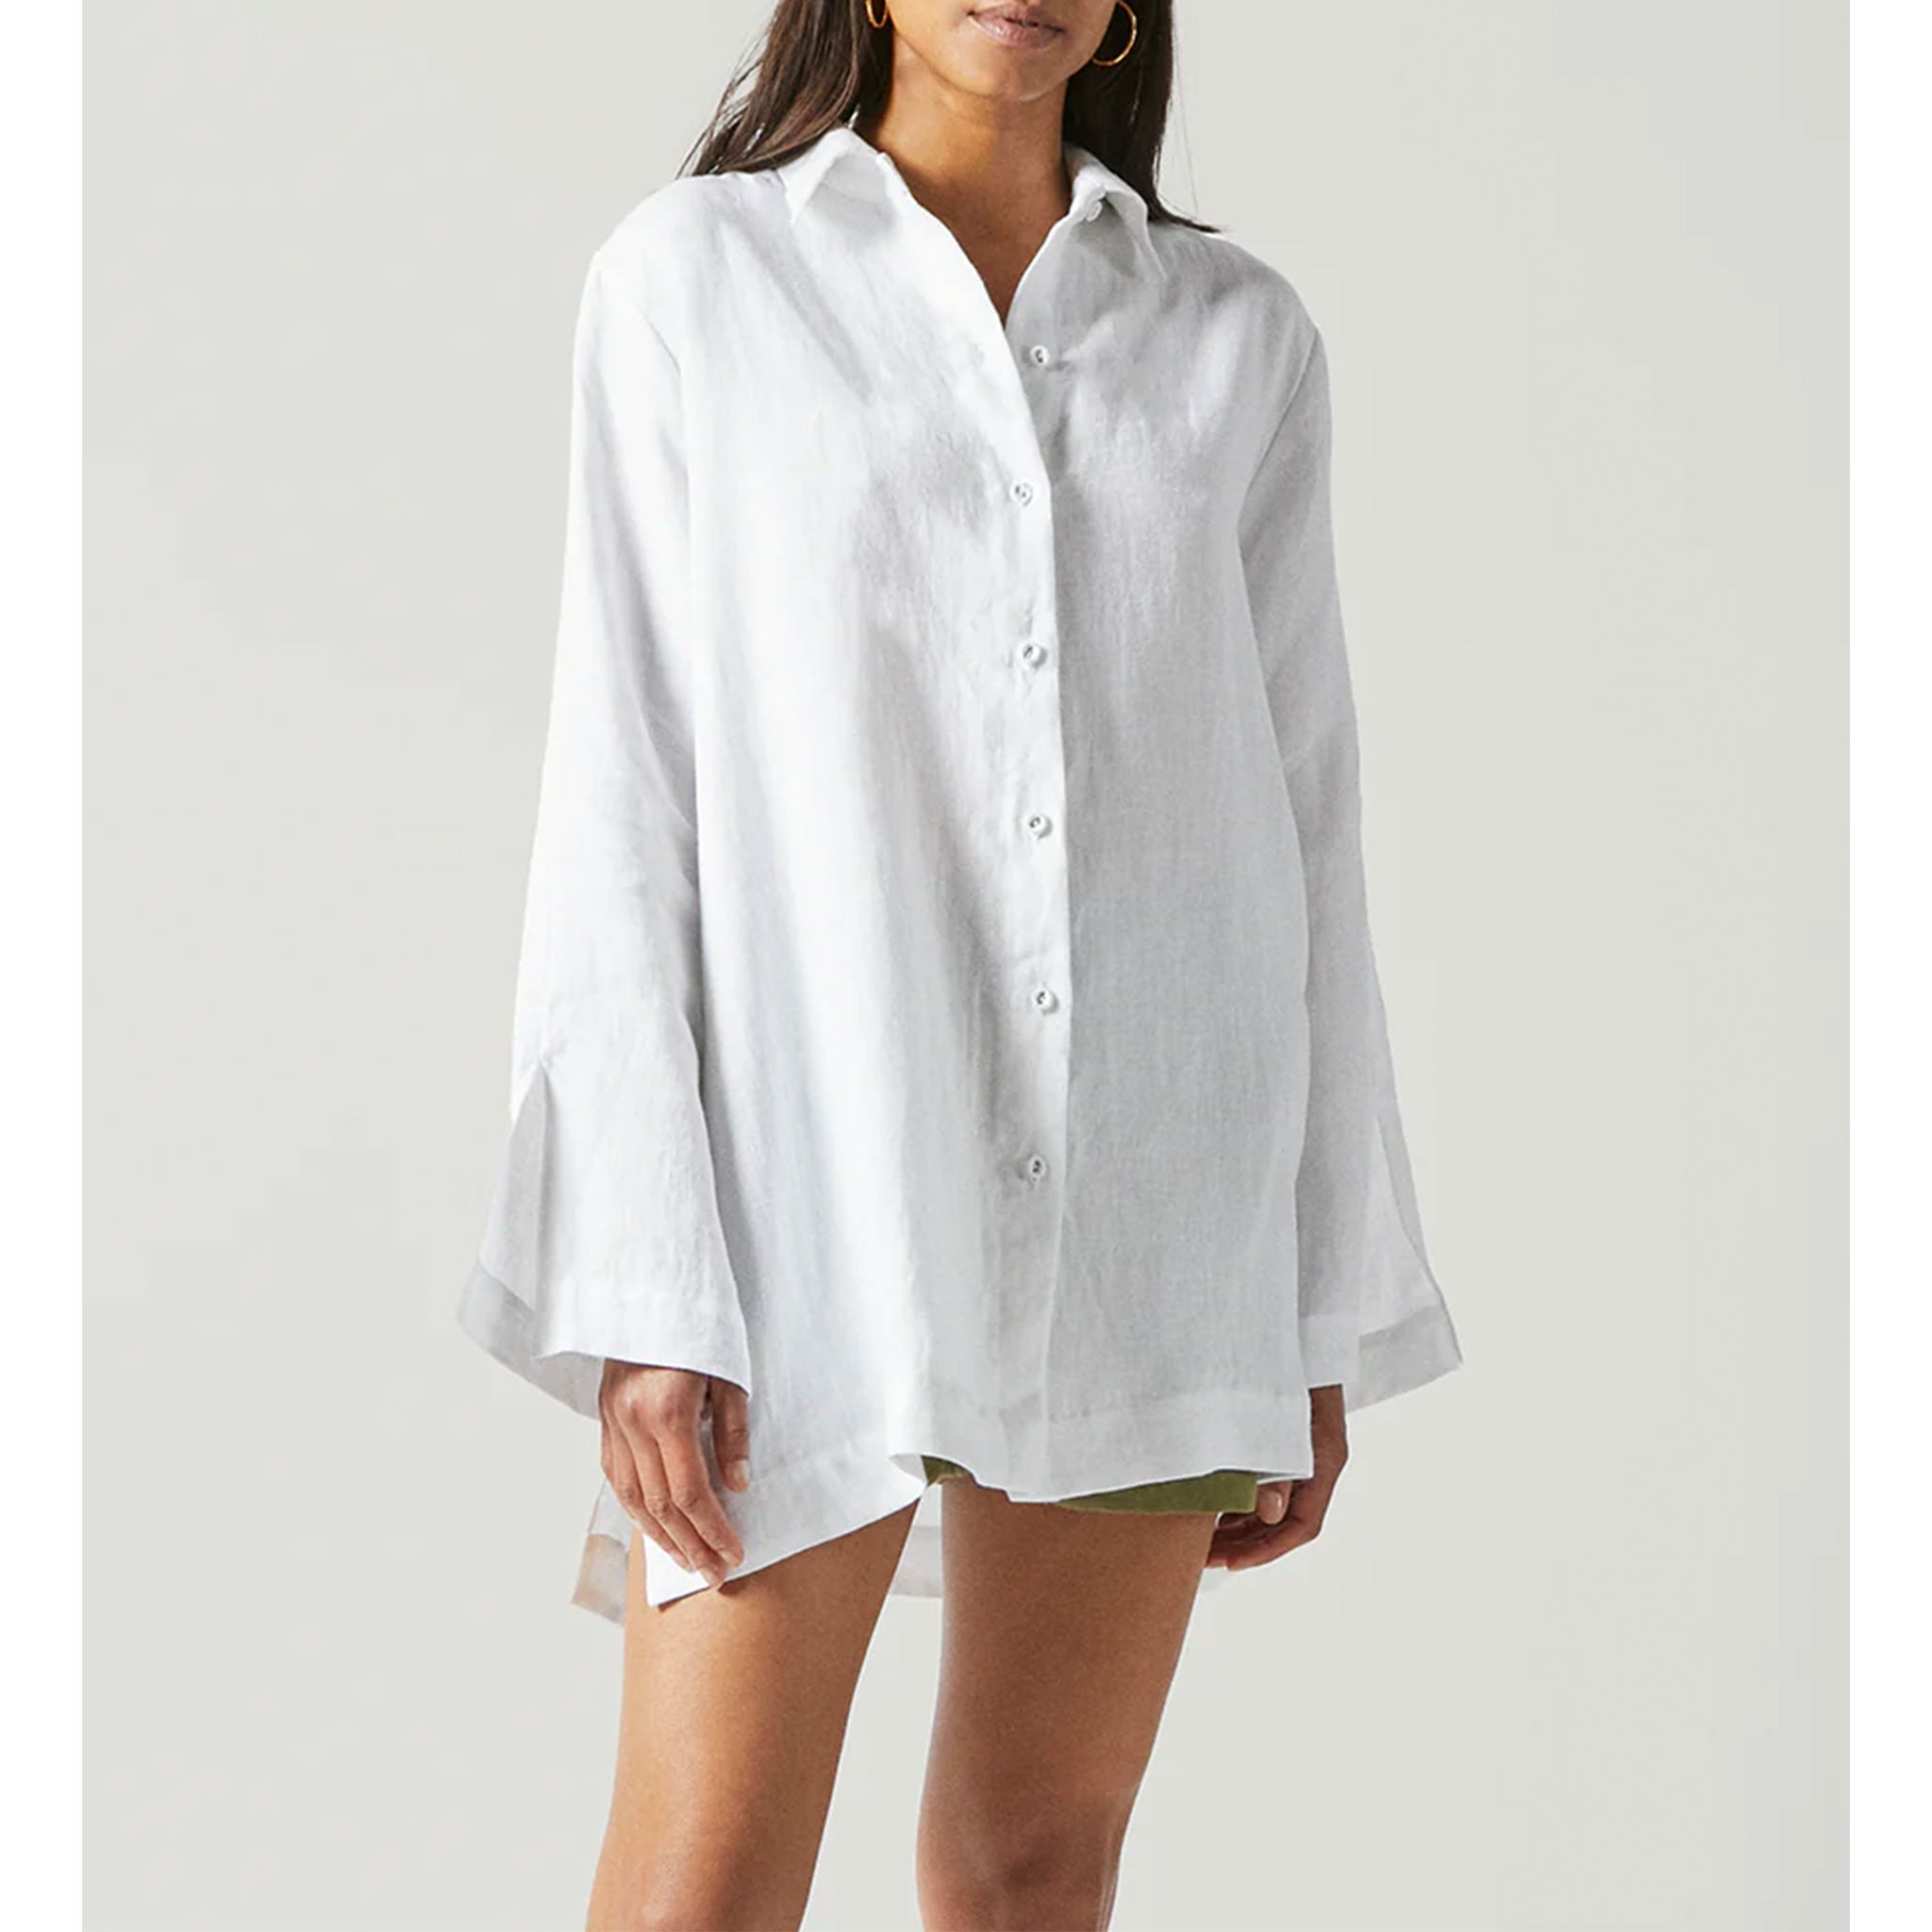 Ginebra Shirt in Off White